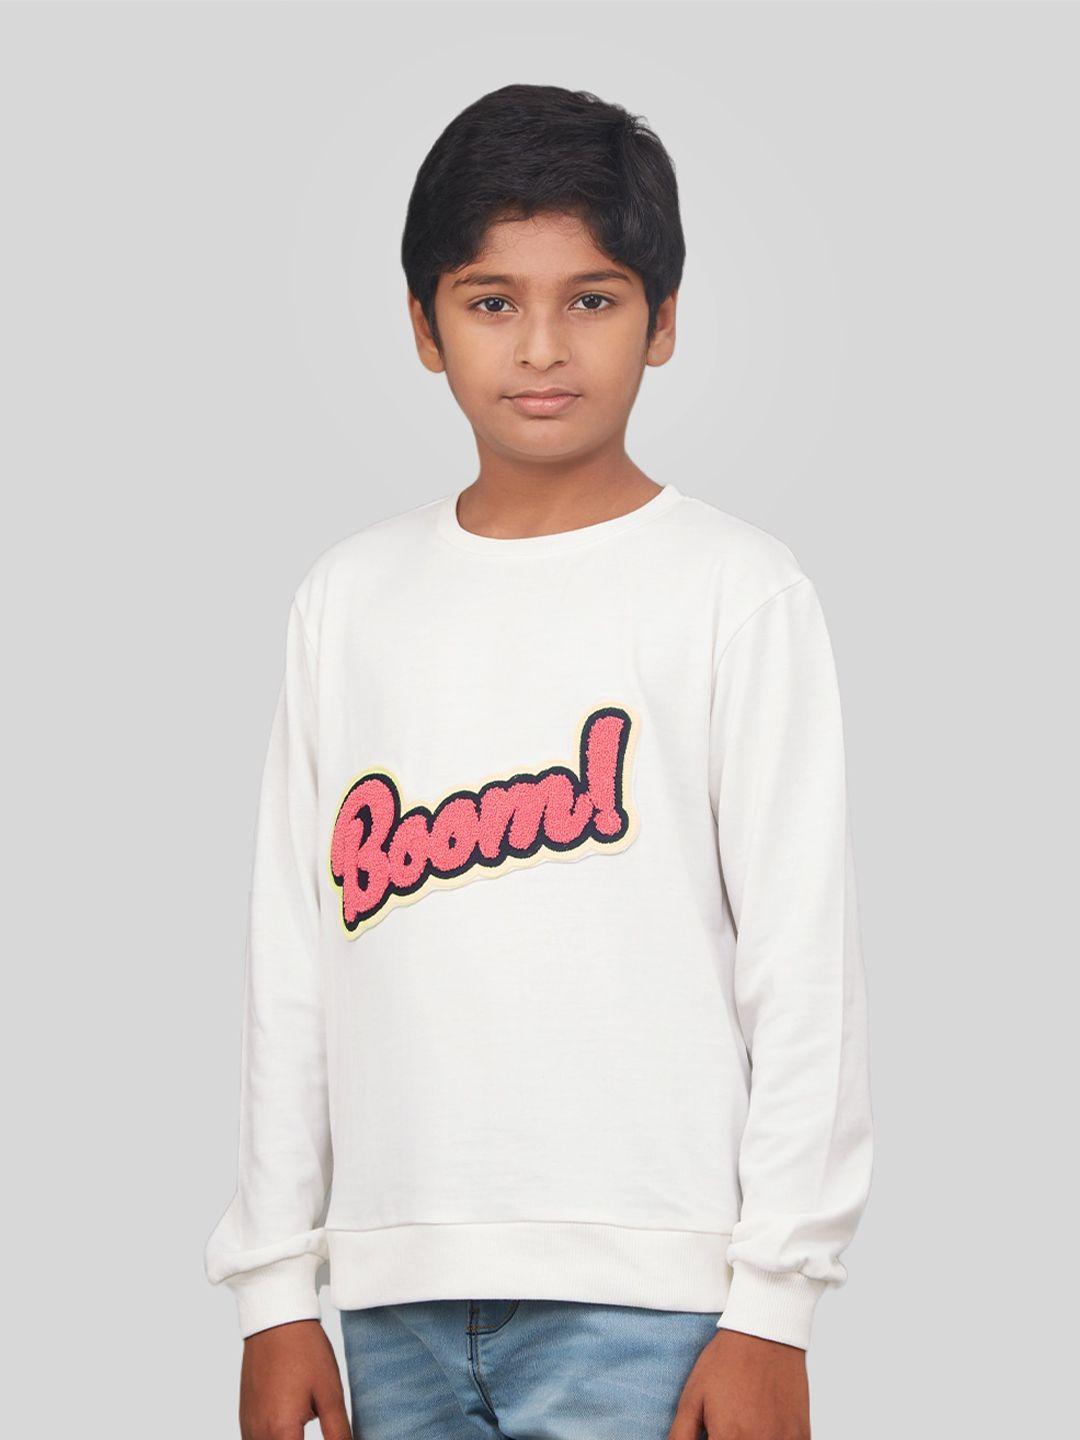 zalio boys typography printed pullover sweatshirt